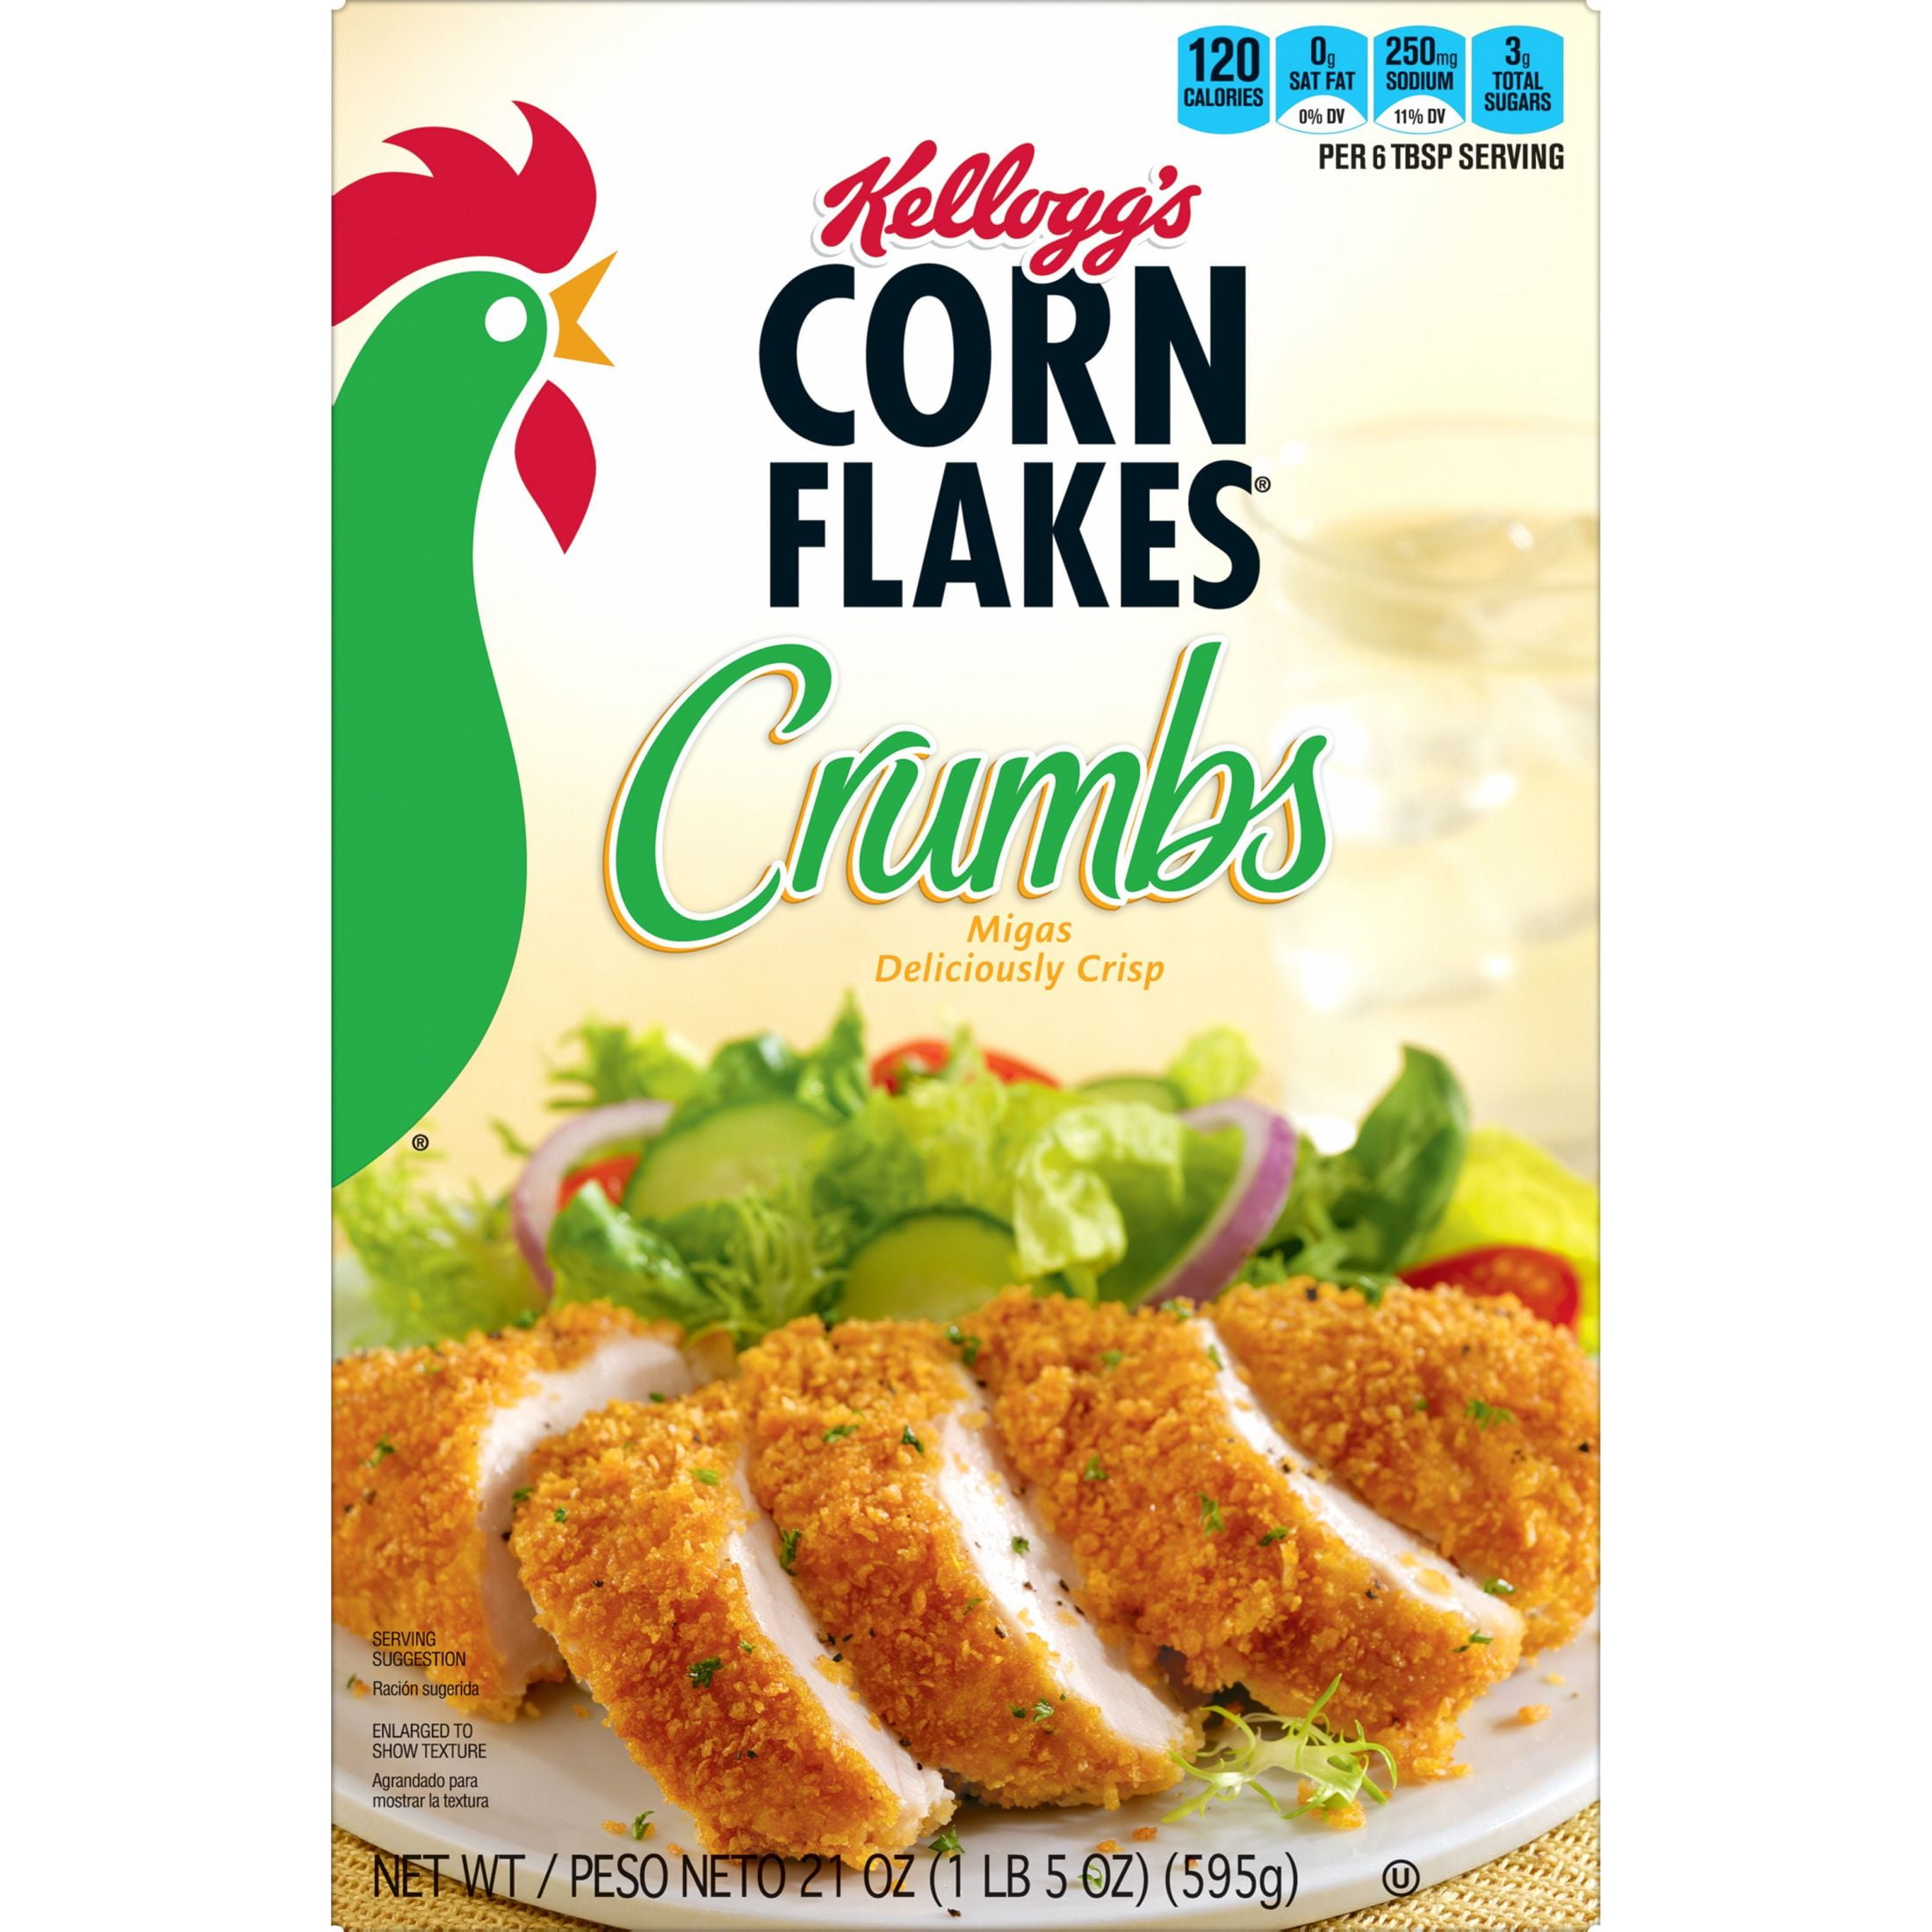 Kellogg's Corn Flakes Original Crumbs, 21 oz